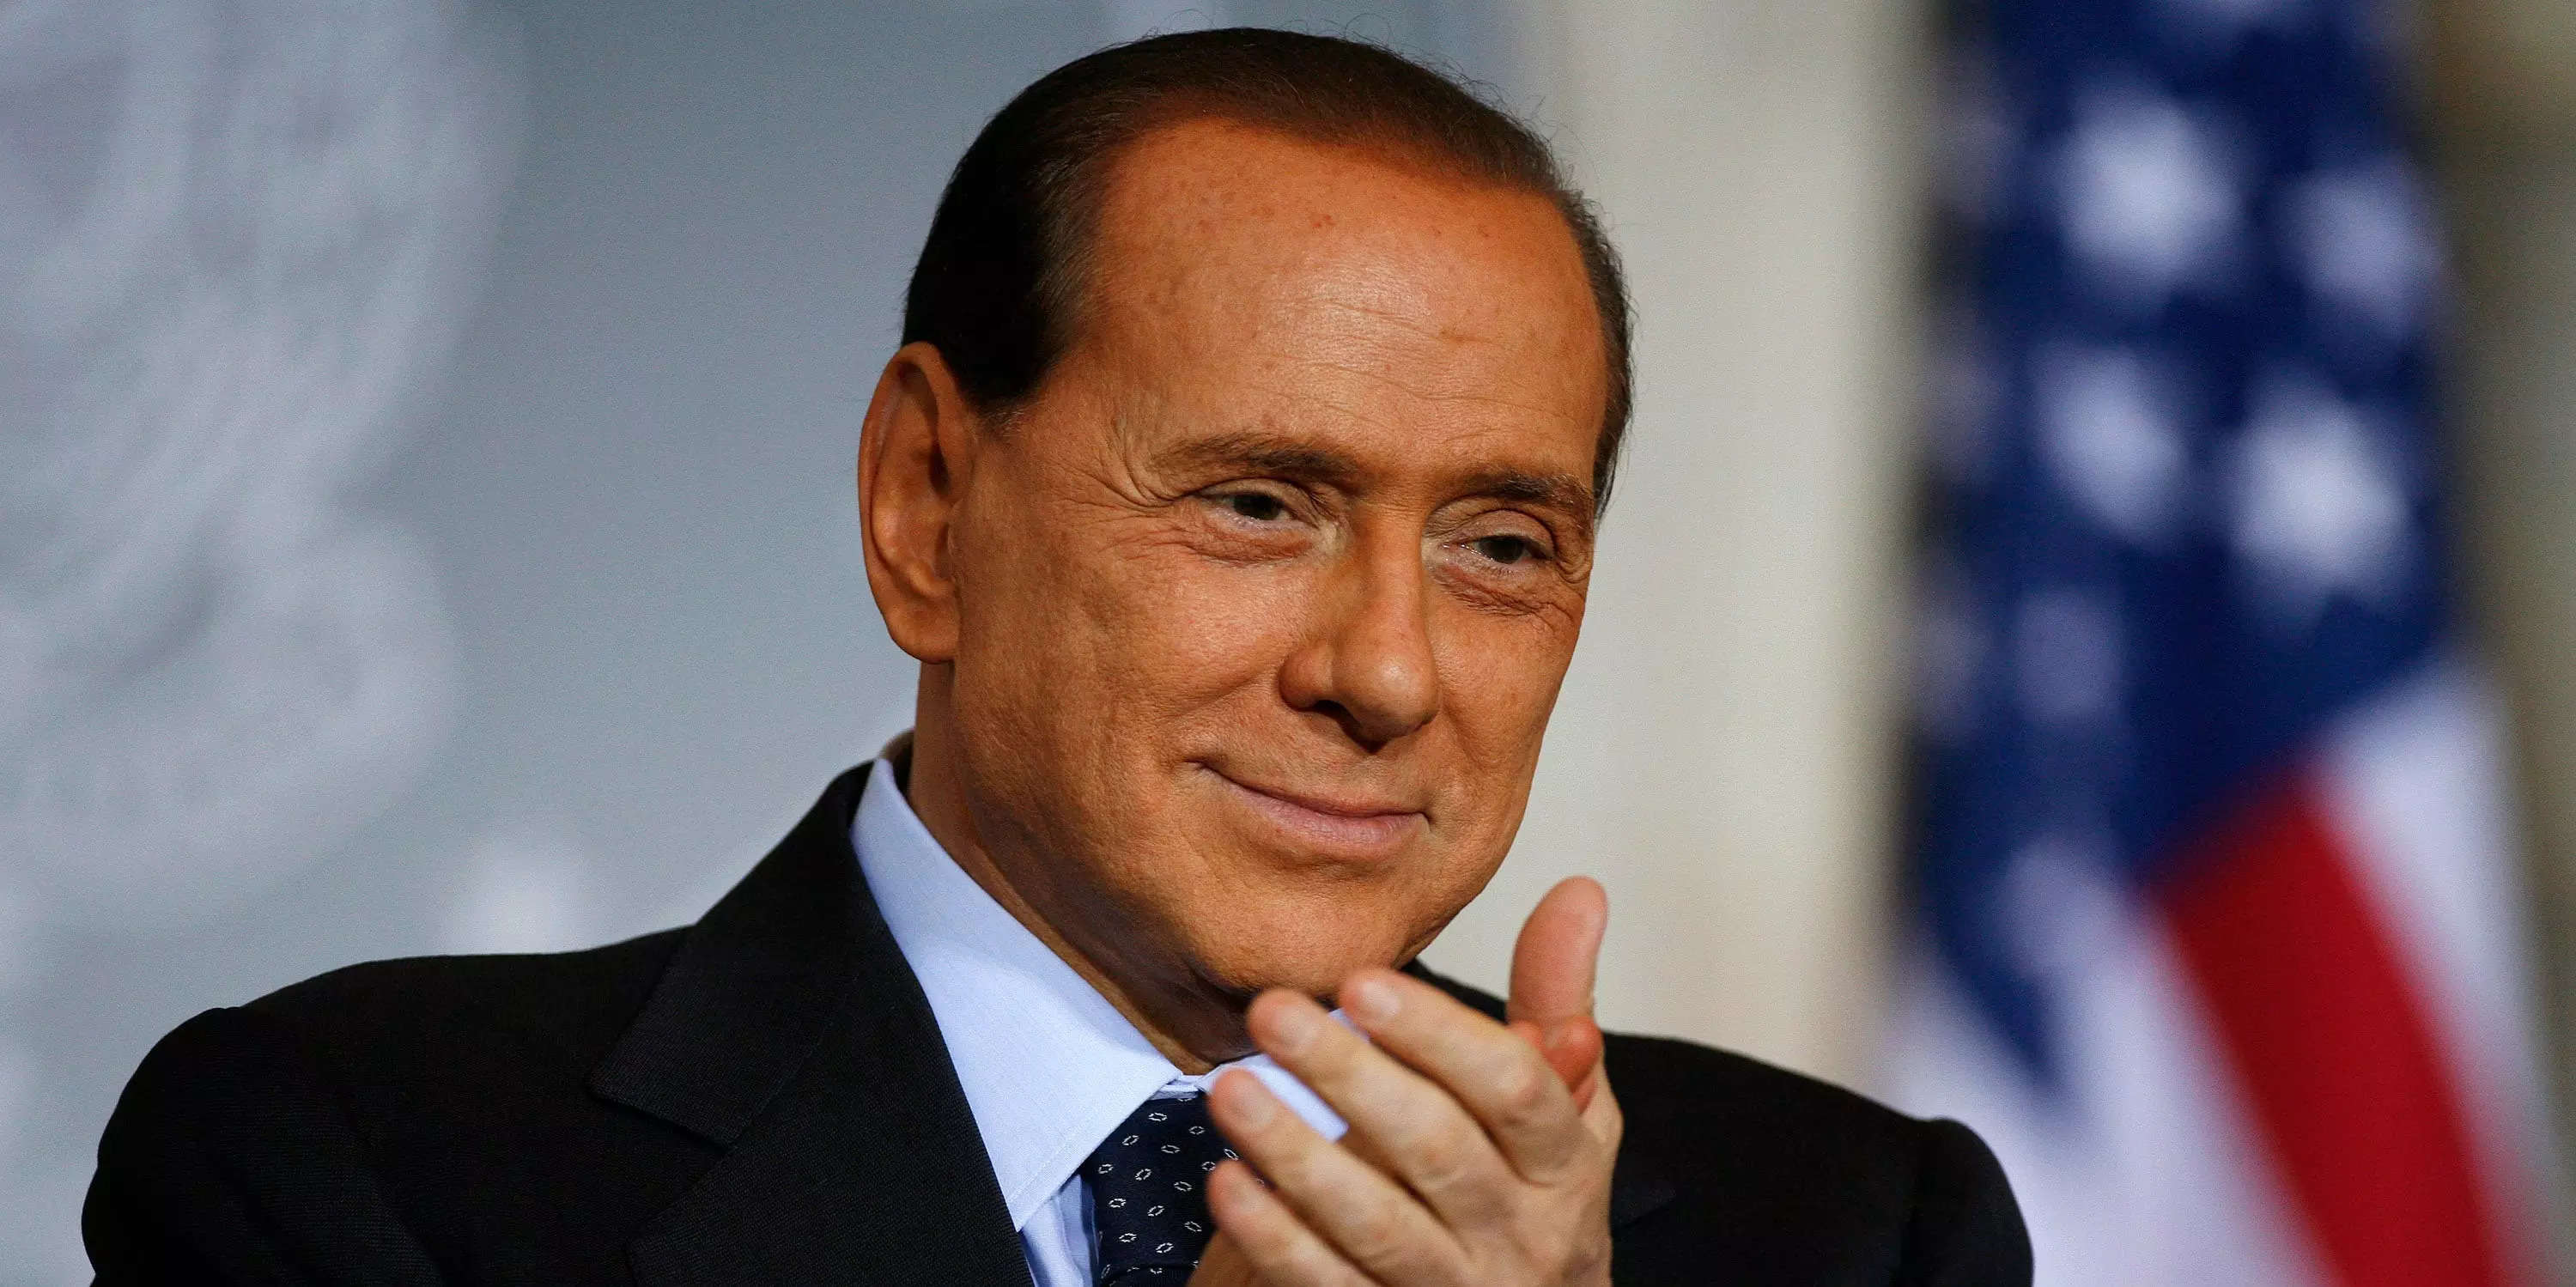 Silvio Berlusconi The 3 Time Italian Leader Infamous For Bunga Bunga Sex Parties Dead At 86